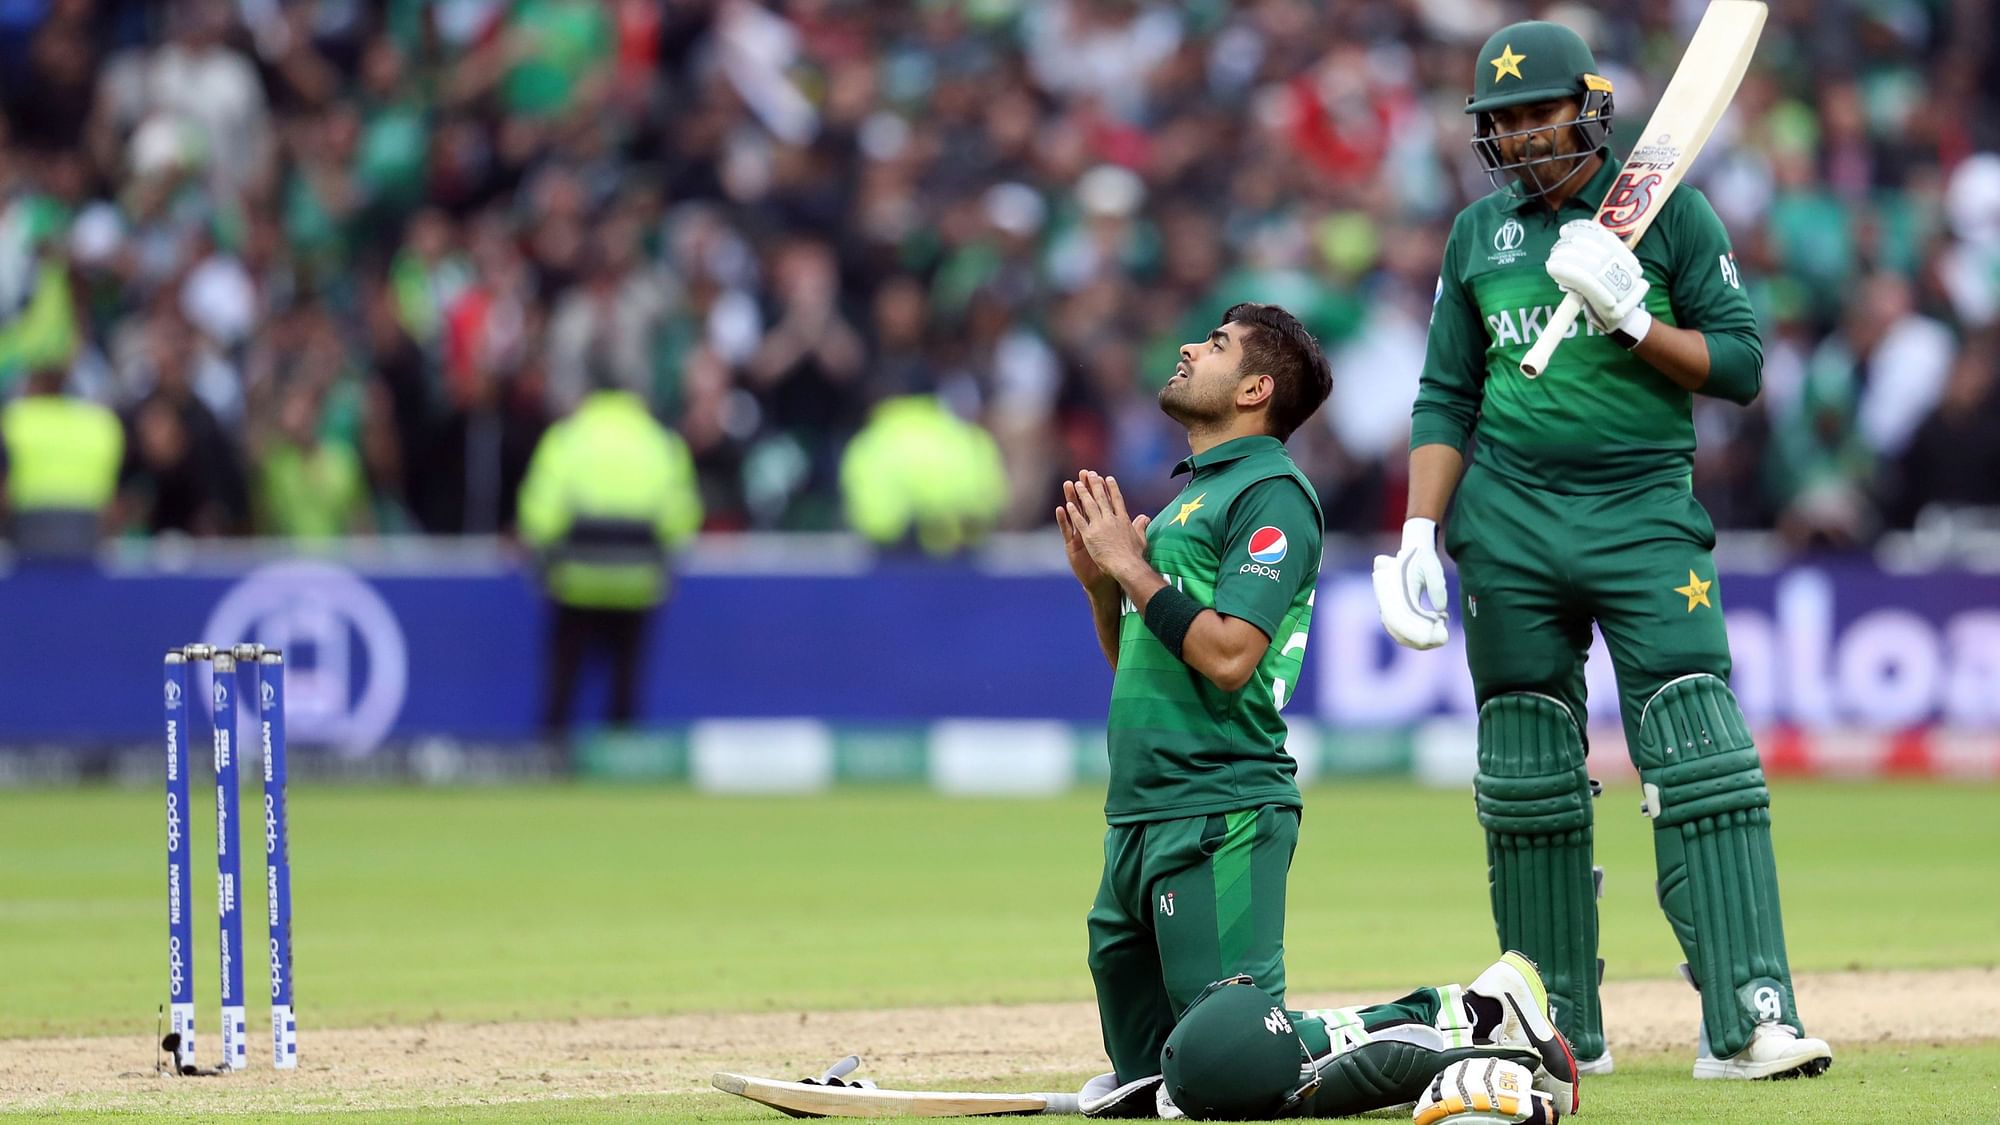 Pakistan’s batsman Babar Azam, left, looks up as teammate Haris Sohail watches on after scoring a century.